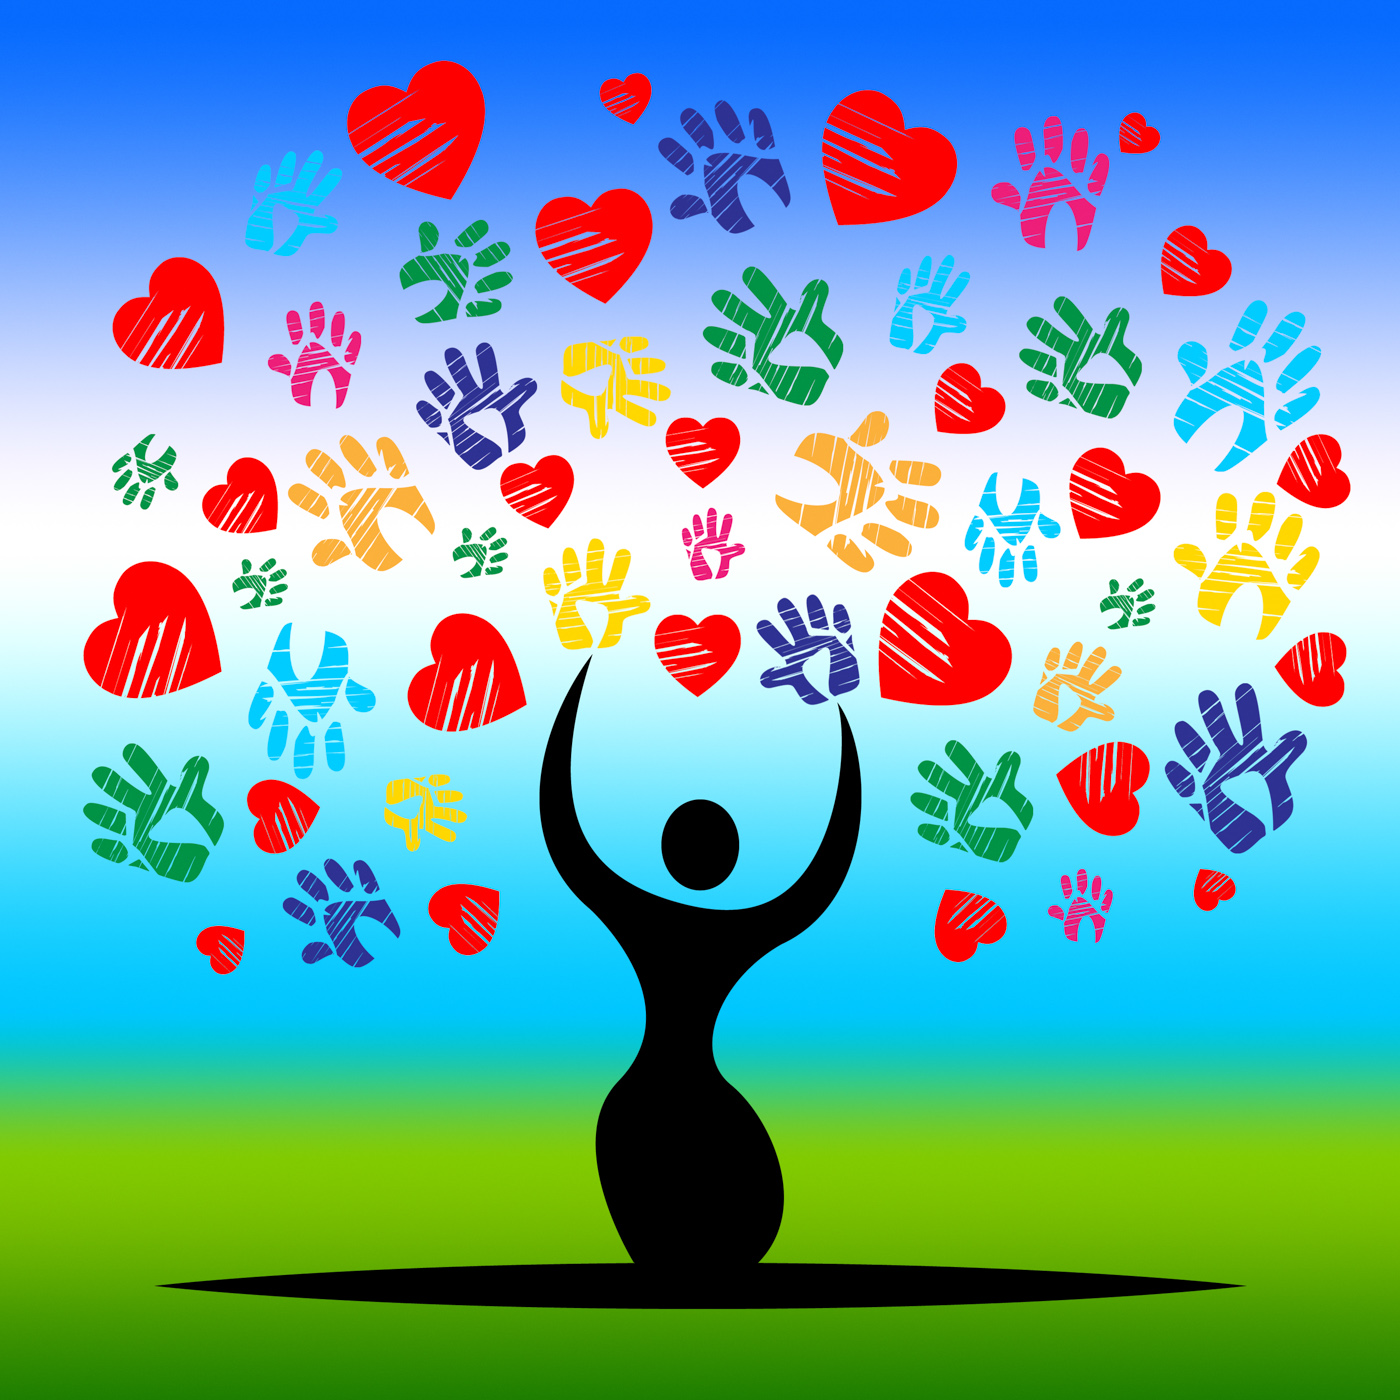 Handprints tree represents valentines day and artwork photo